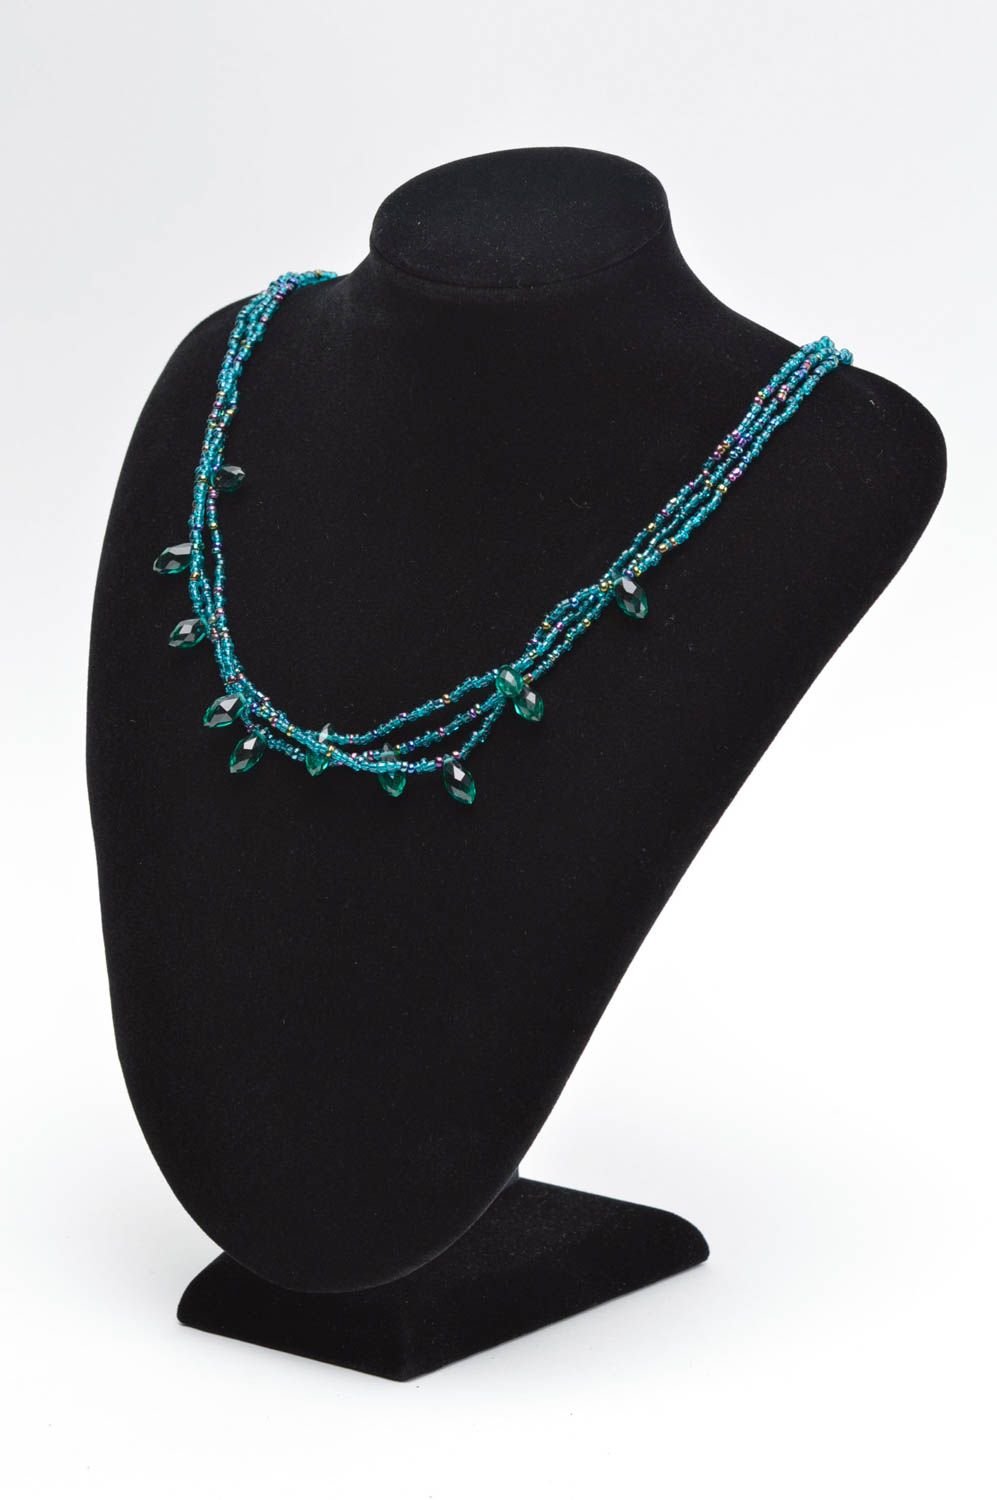 Handmade necklace designer jewelry beaded accessory gift ideas bead necklace photo 5